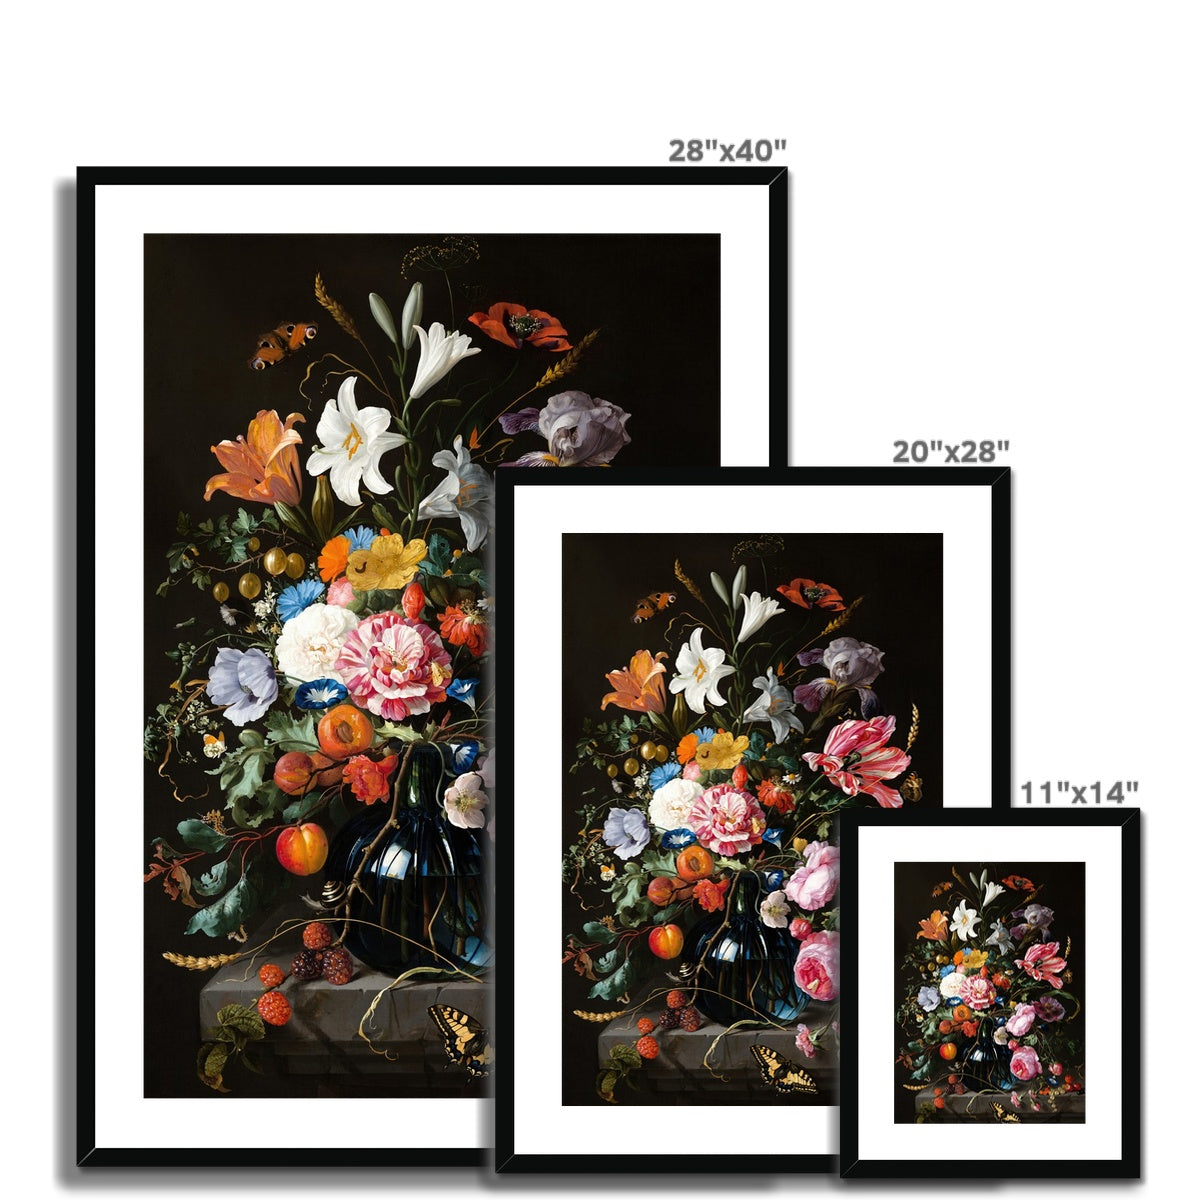 &#39;Vase of Flowers&#39; Still Life by Jan Davidsz de Heem. Framed Open Edition Fine Art Print. Historic Art